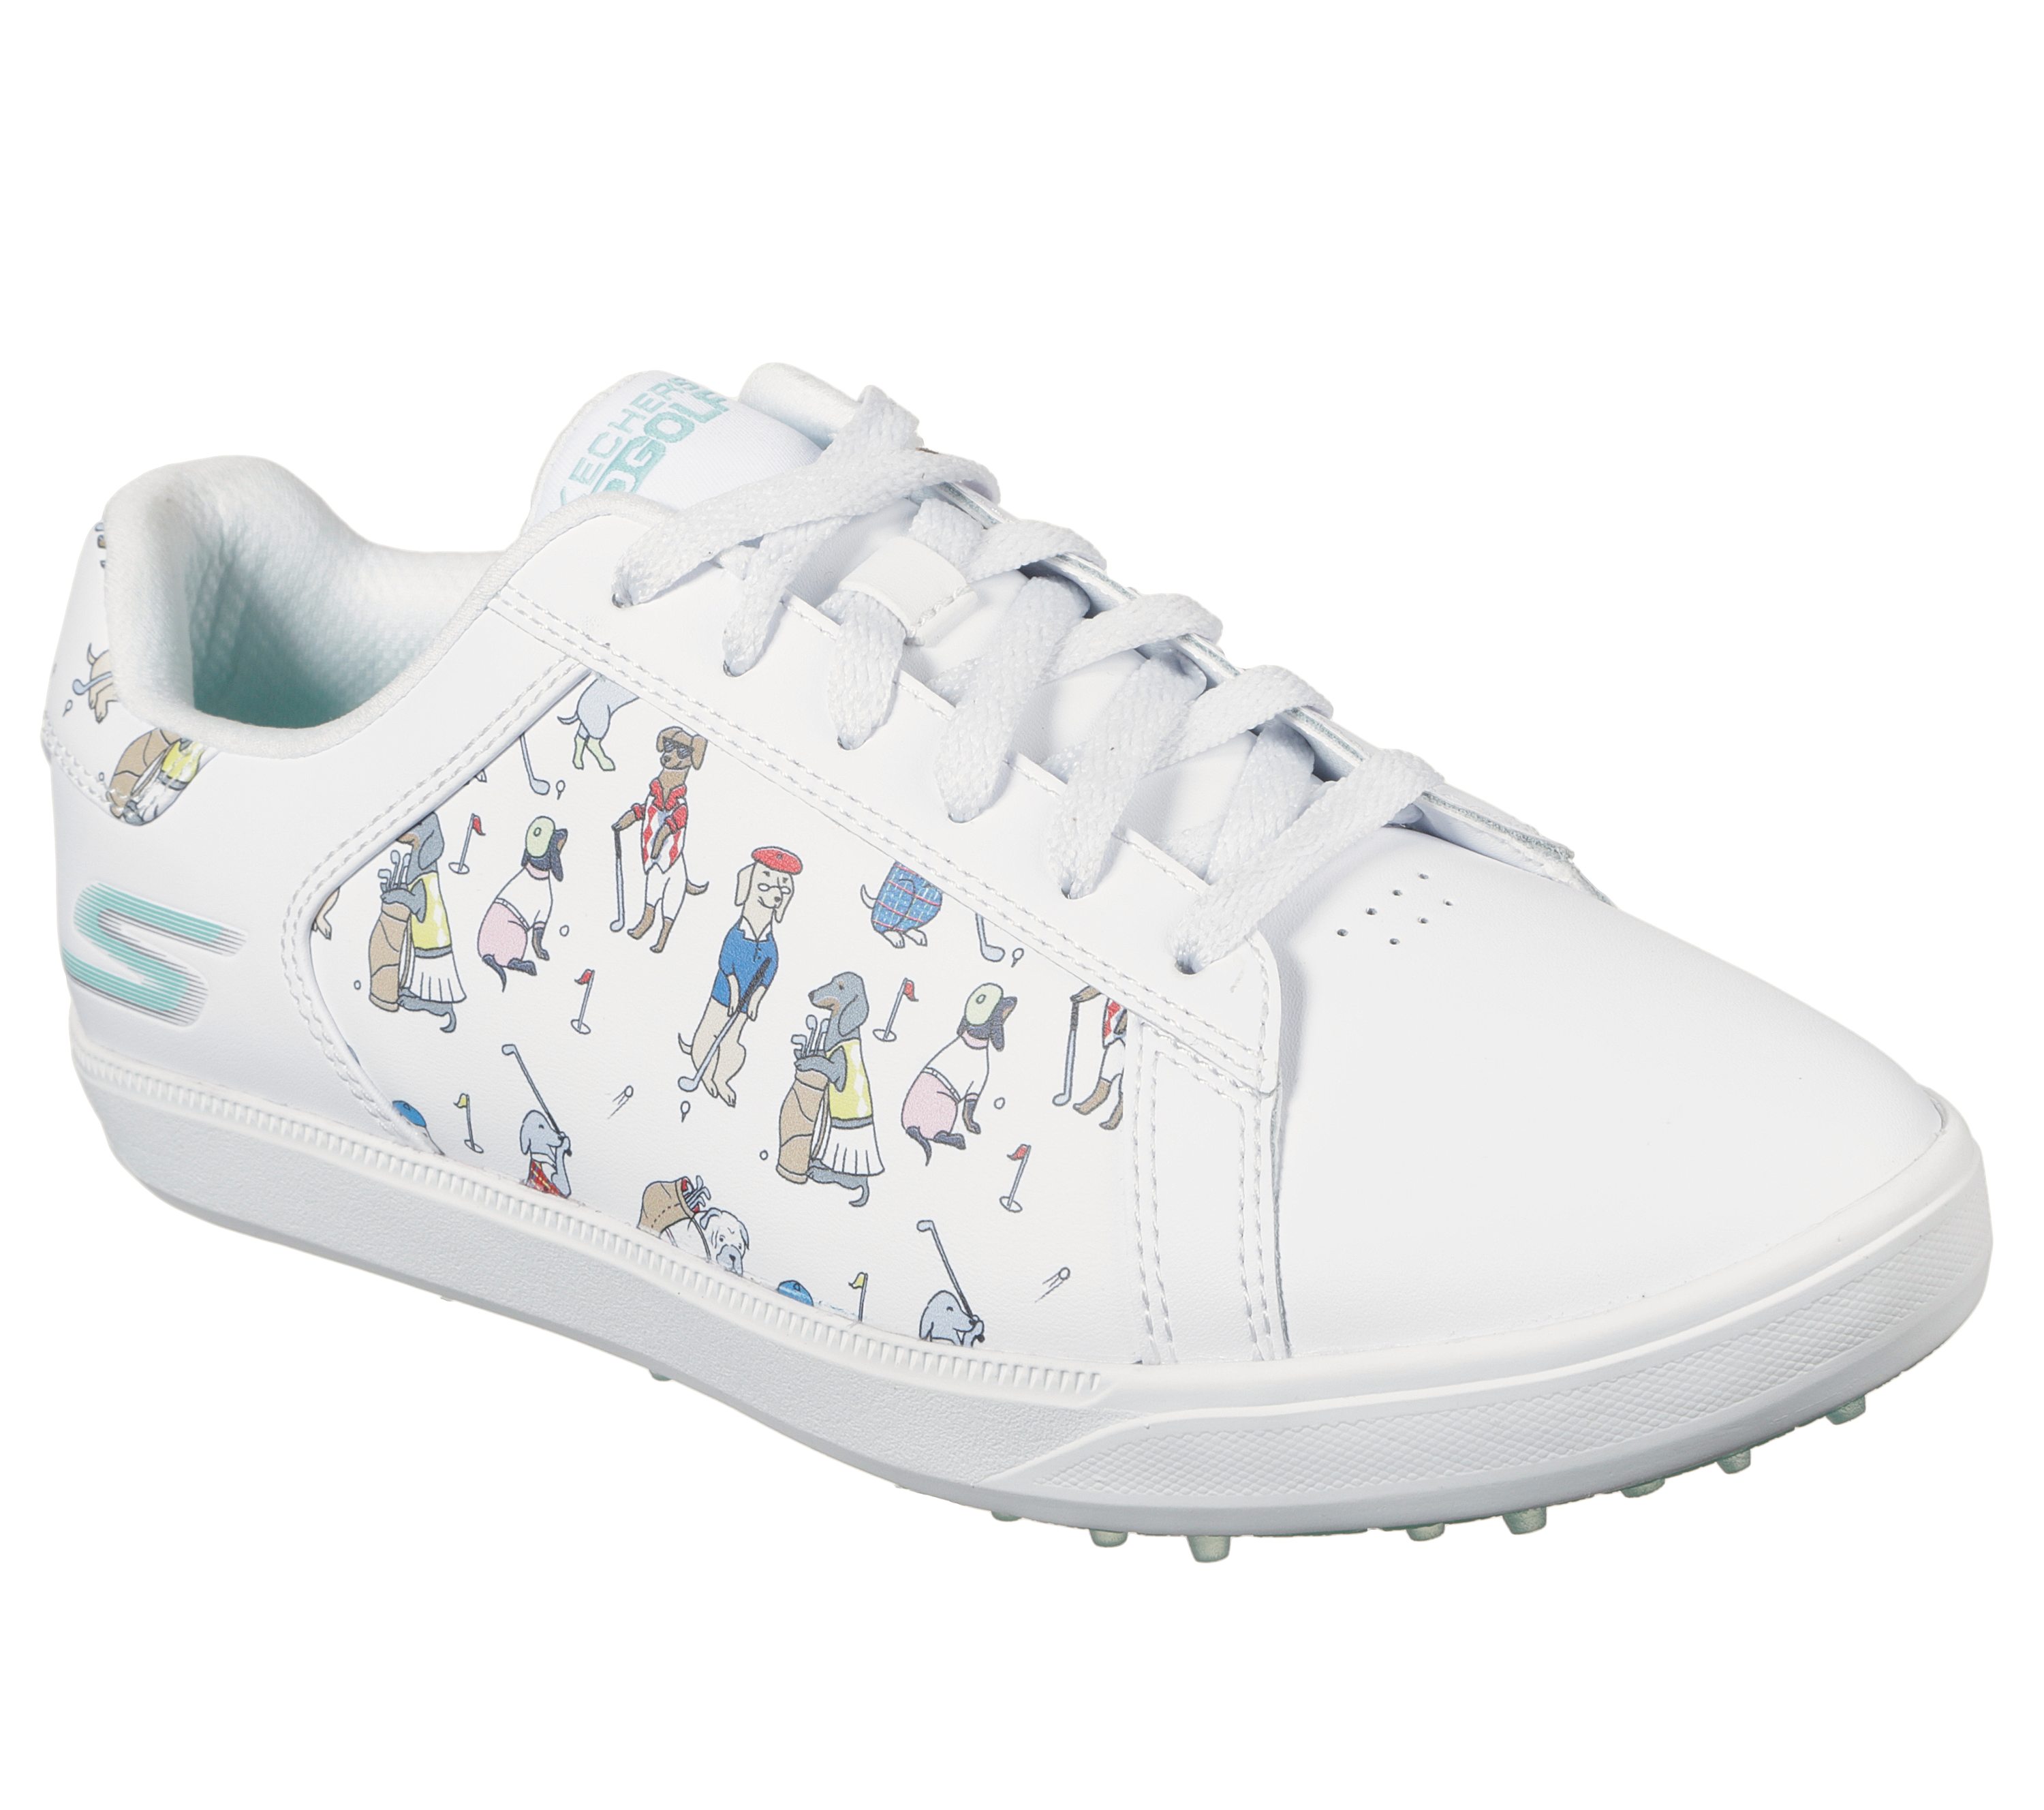 skechers twinkle toes golf shoes